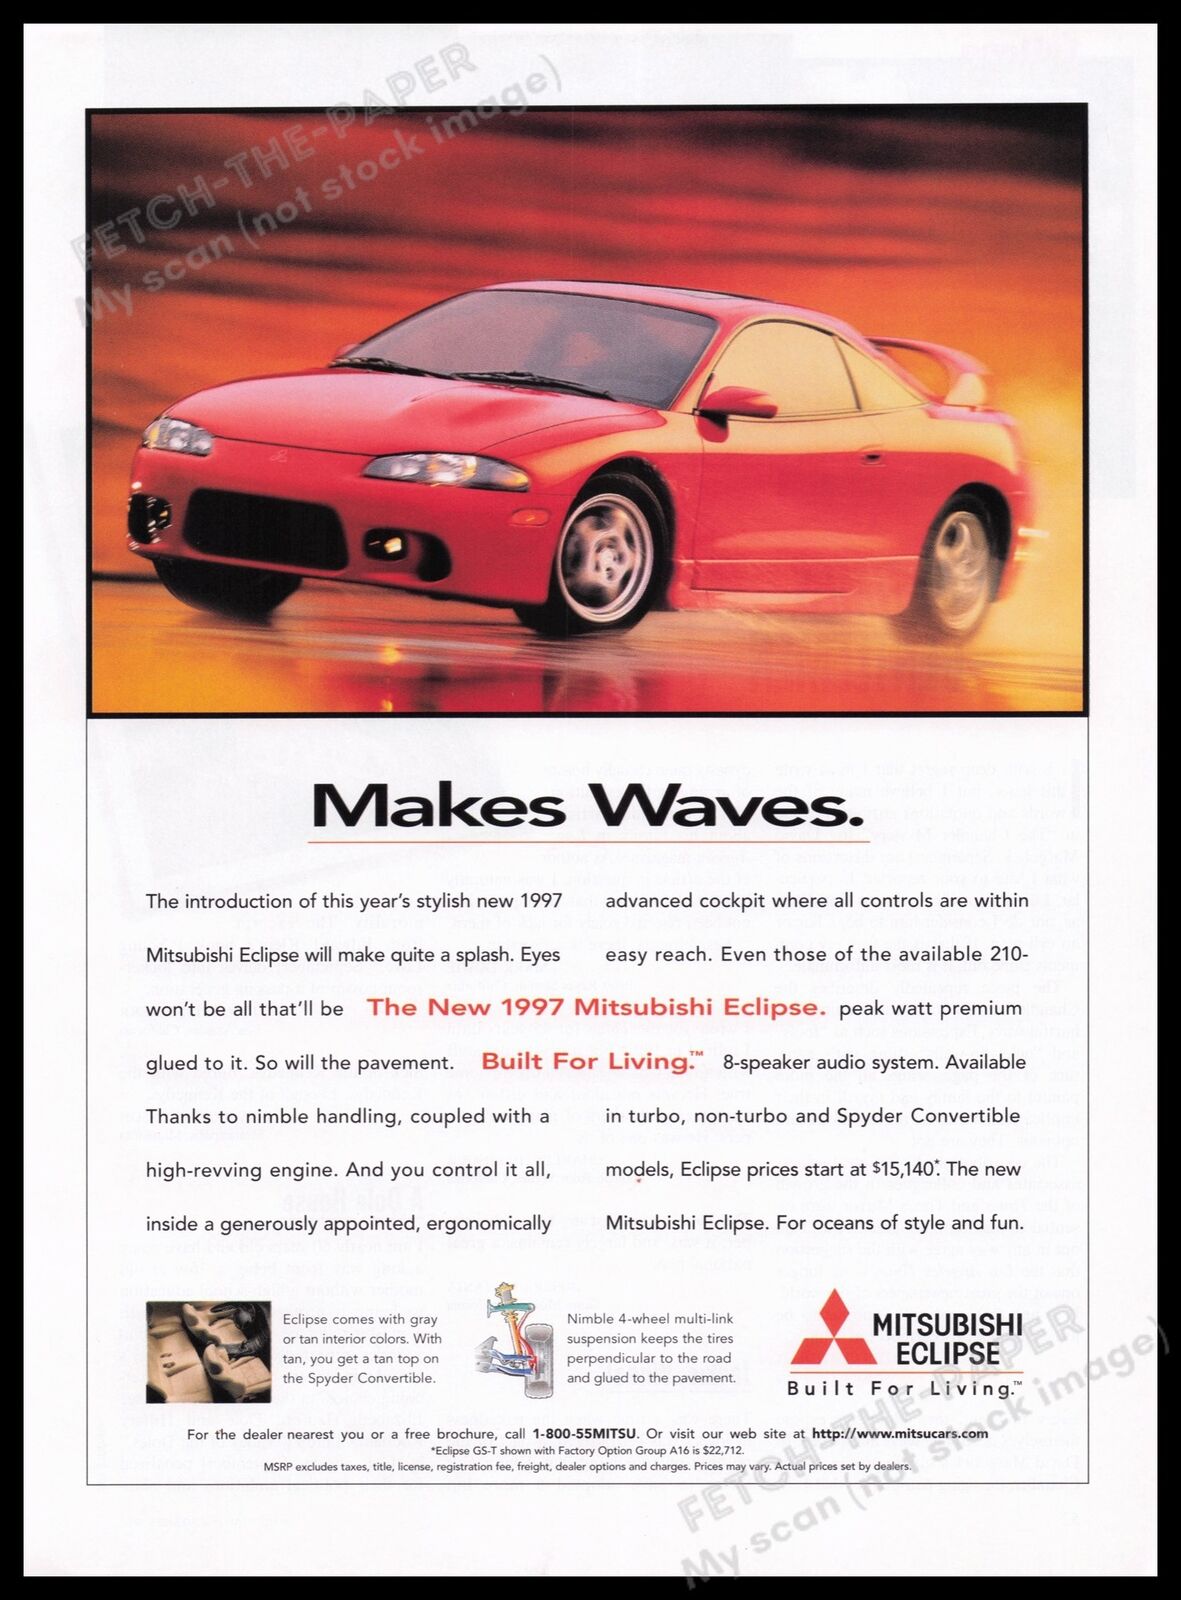 Mitsubishi Eclipse Car 1990s Print Advertisement Ad 1996 